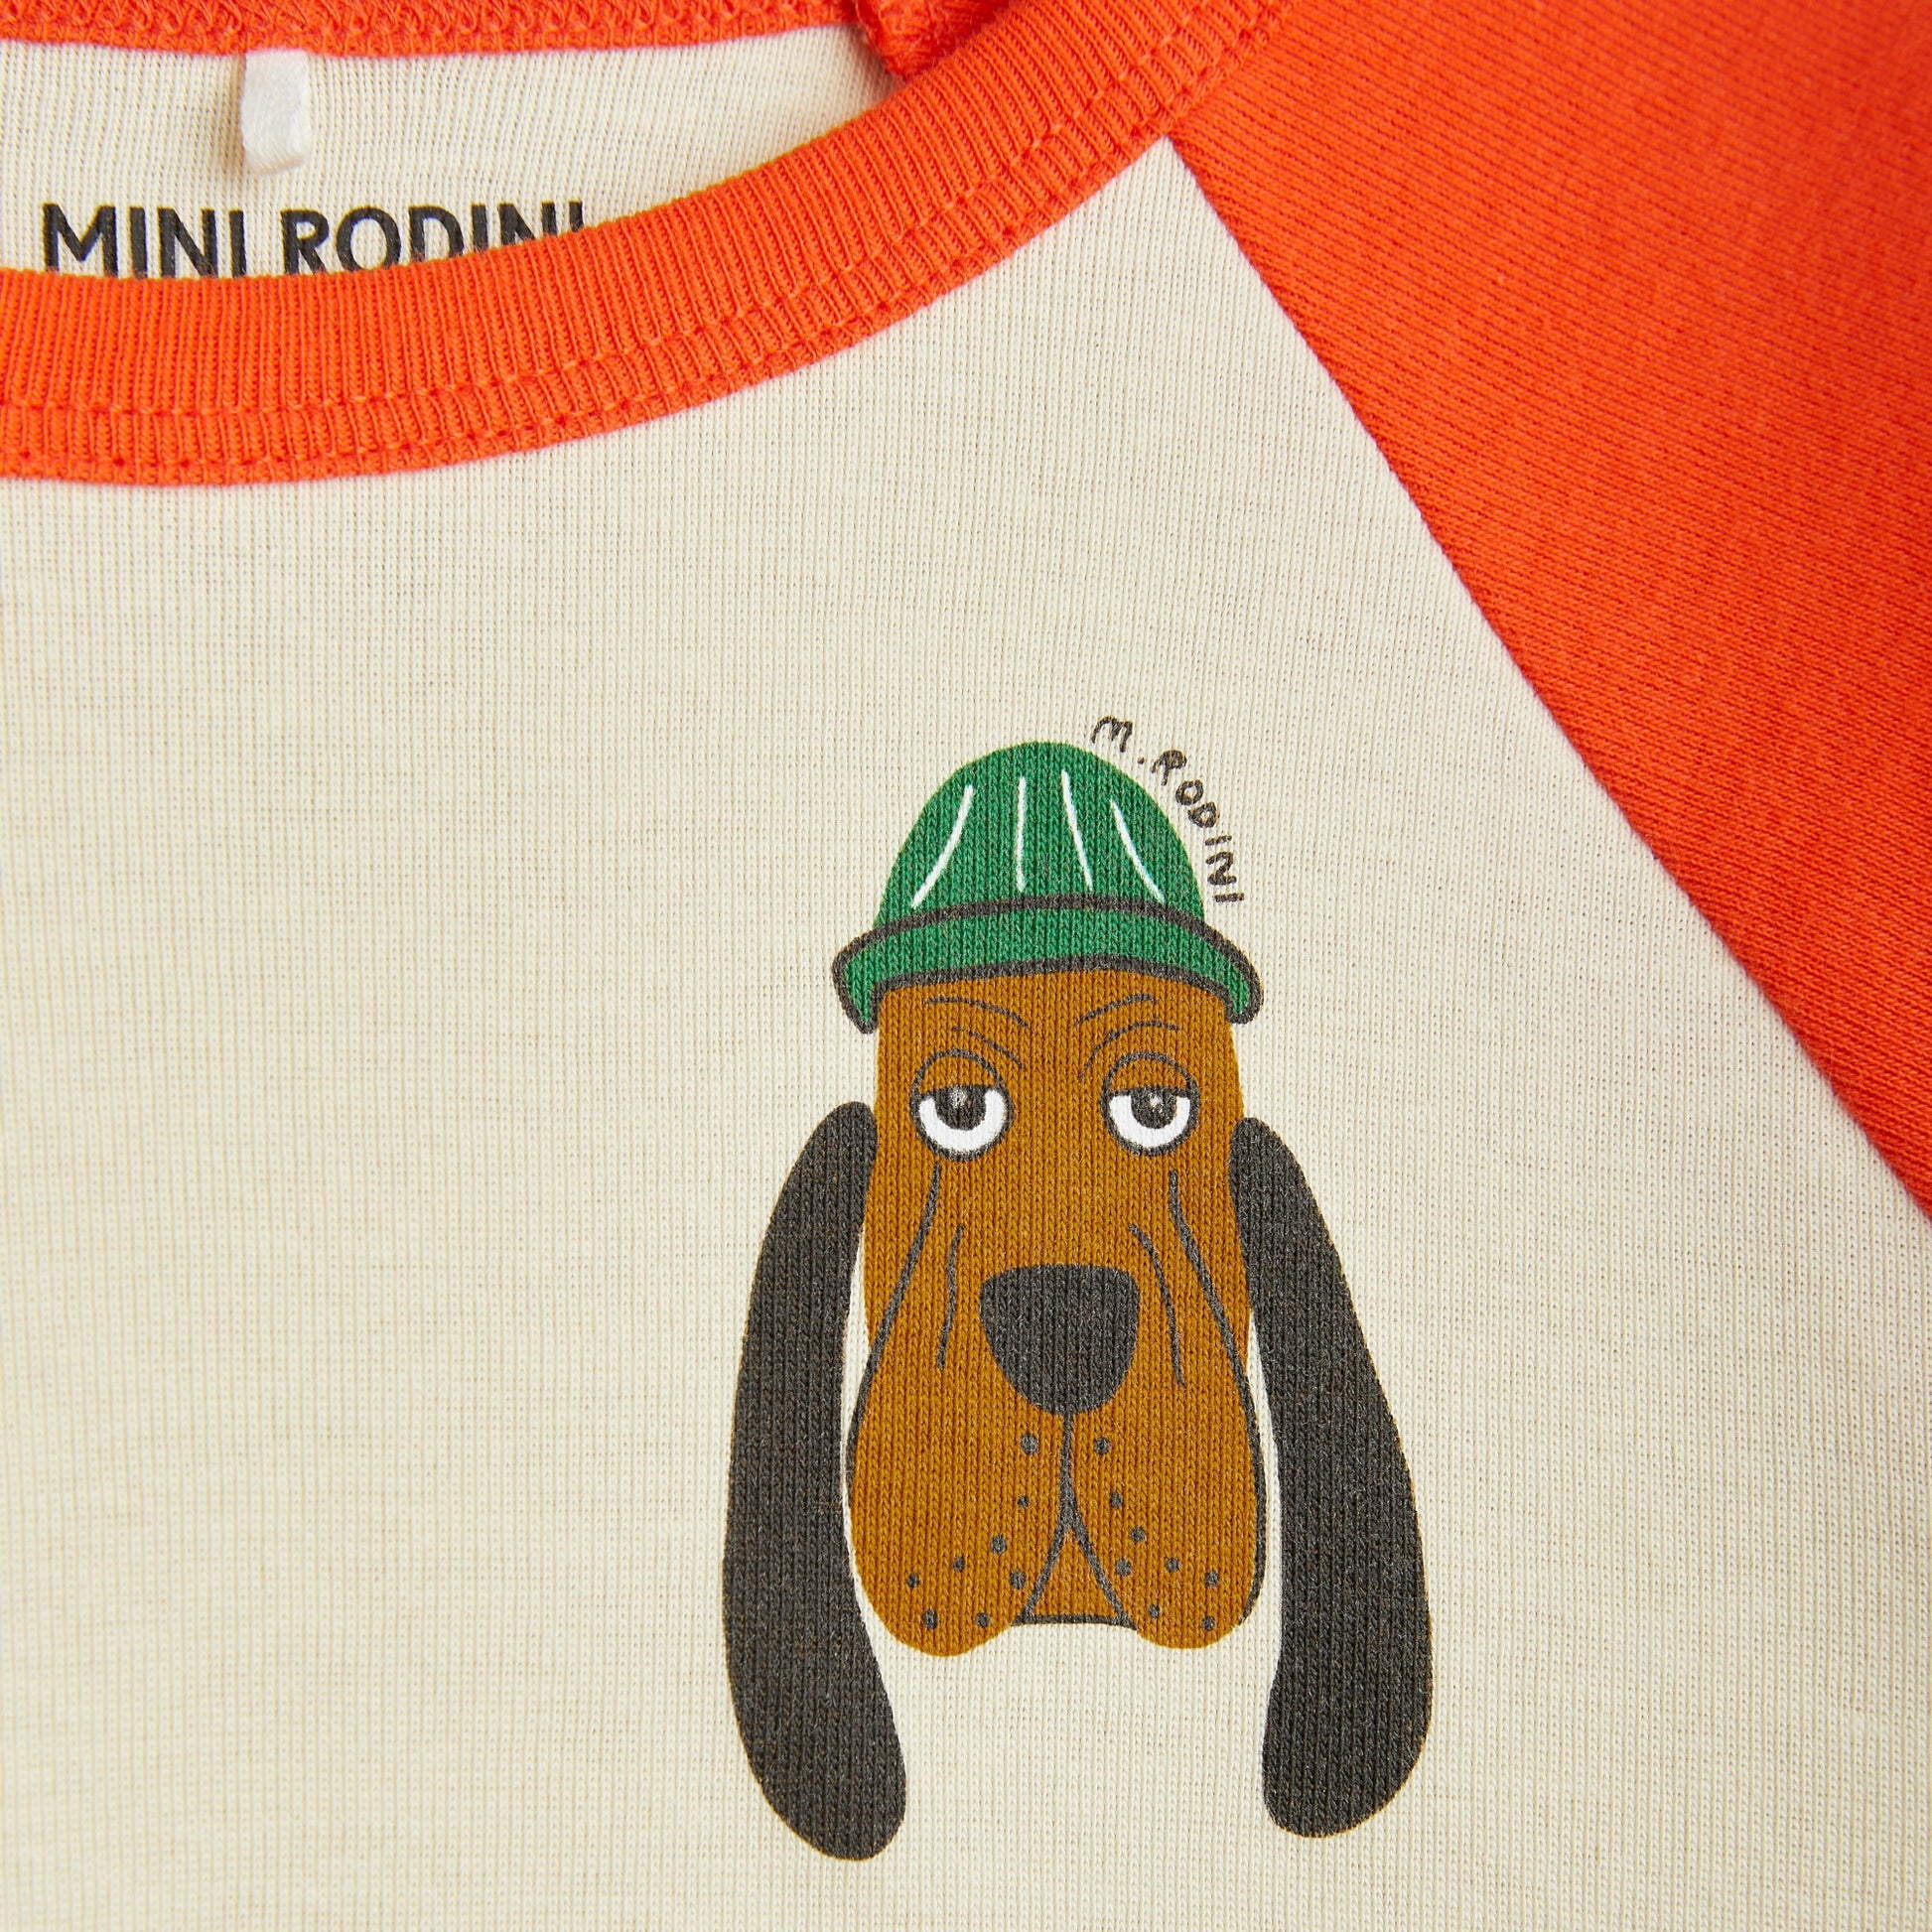 MINI RODINI Bloodhound Longsleeve T-Shirt ALWAYS SHOW